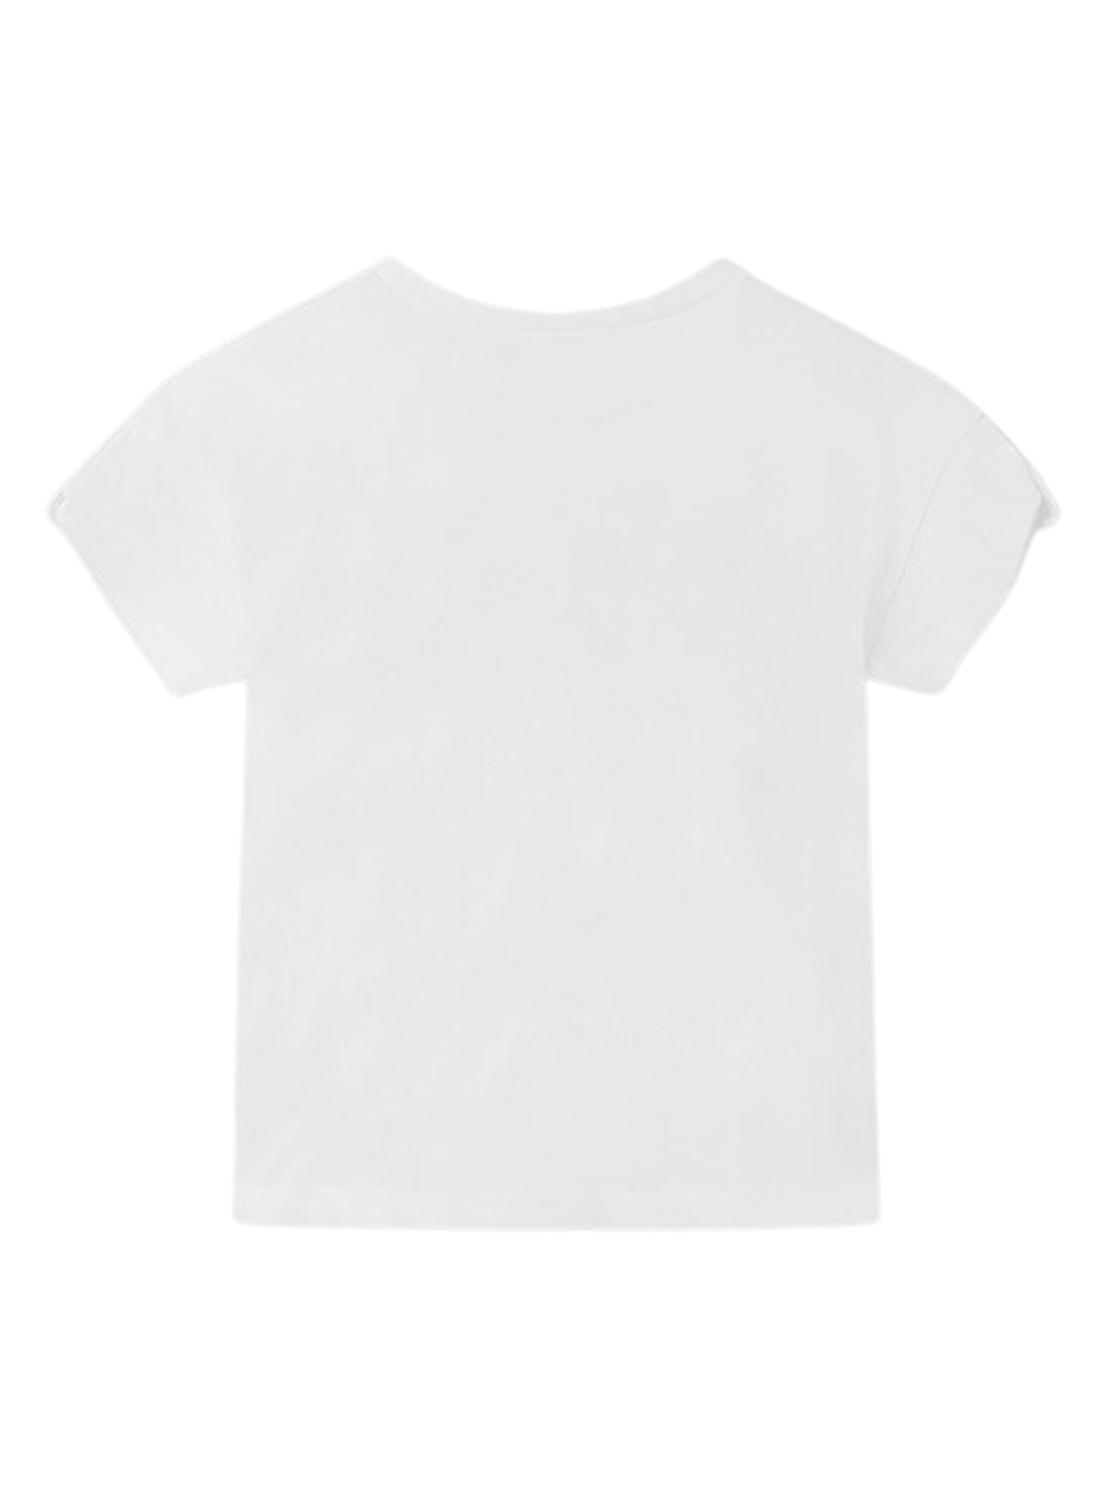 T-Shirt Mayoral Chica Sorriso Bianco per Bambina